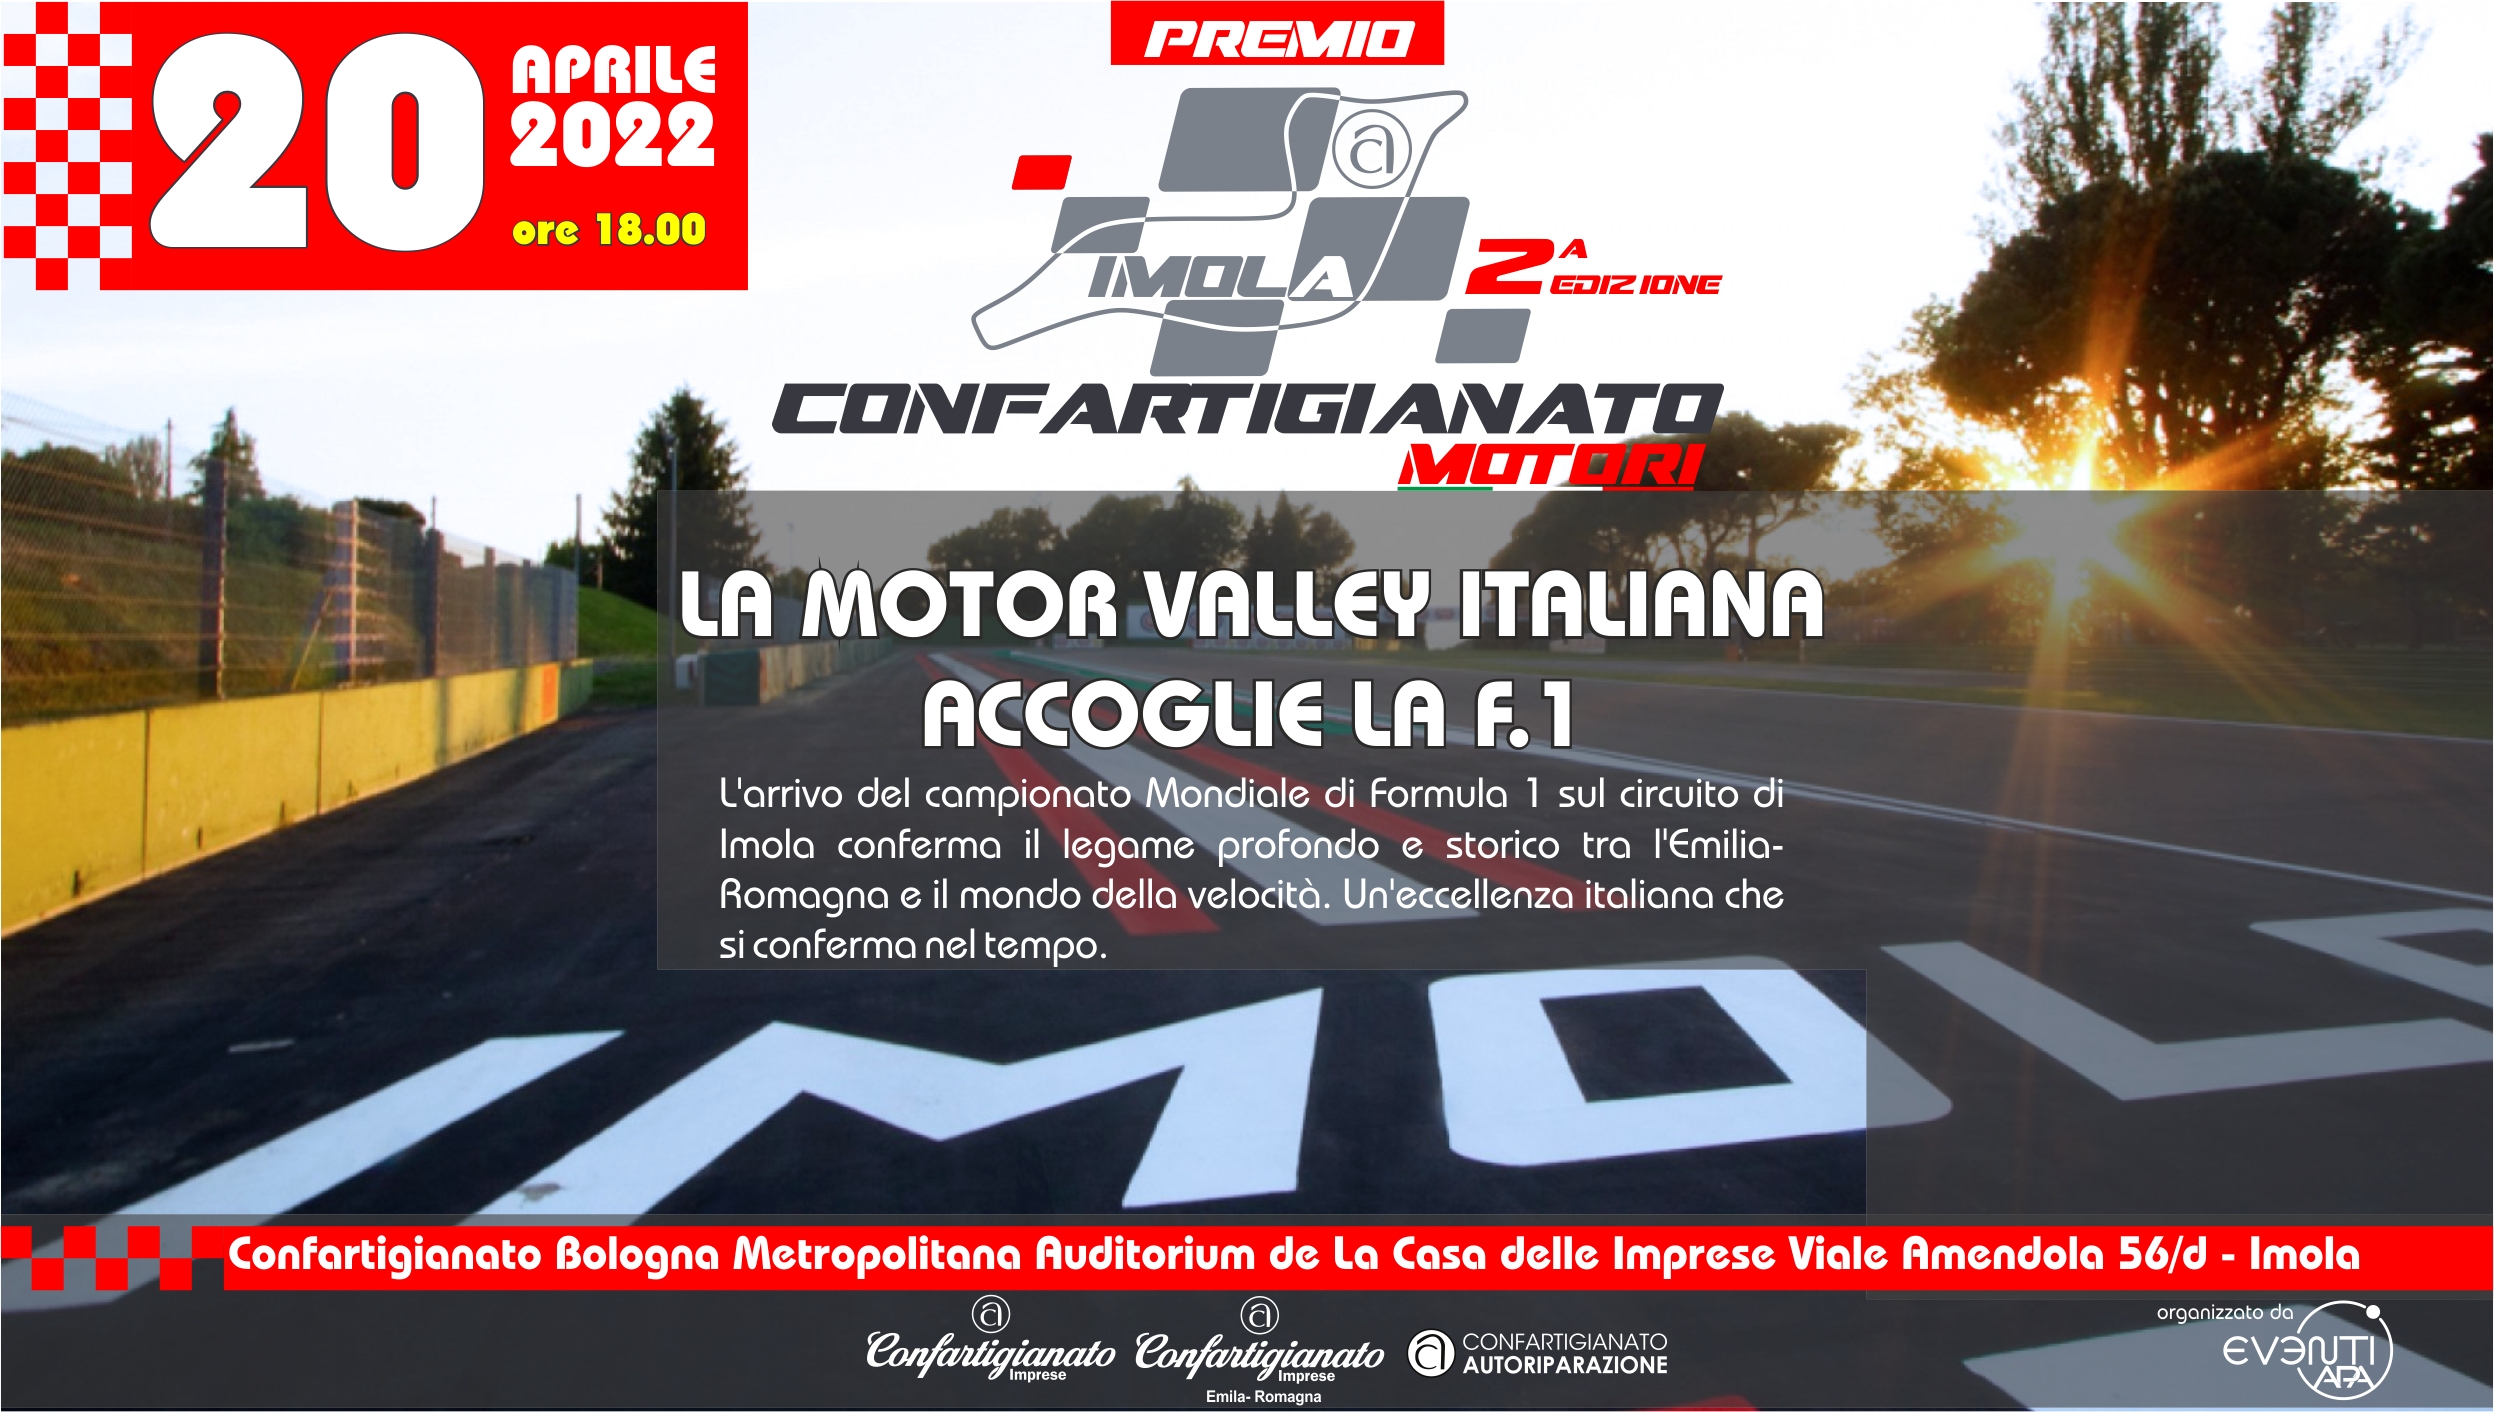 Premio Confartigianato motori Imola Gp Made in Italy Emilia-Romagna